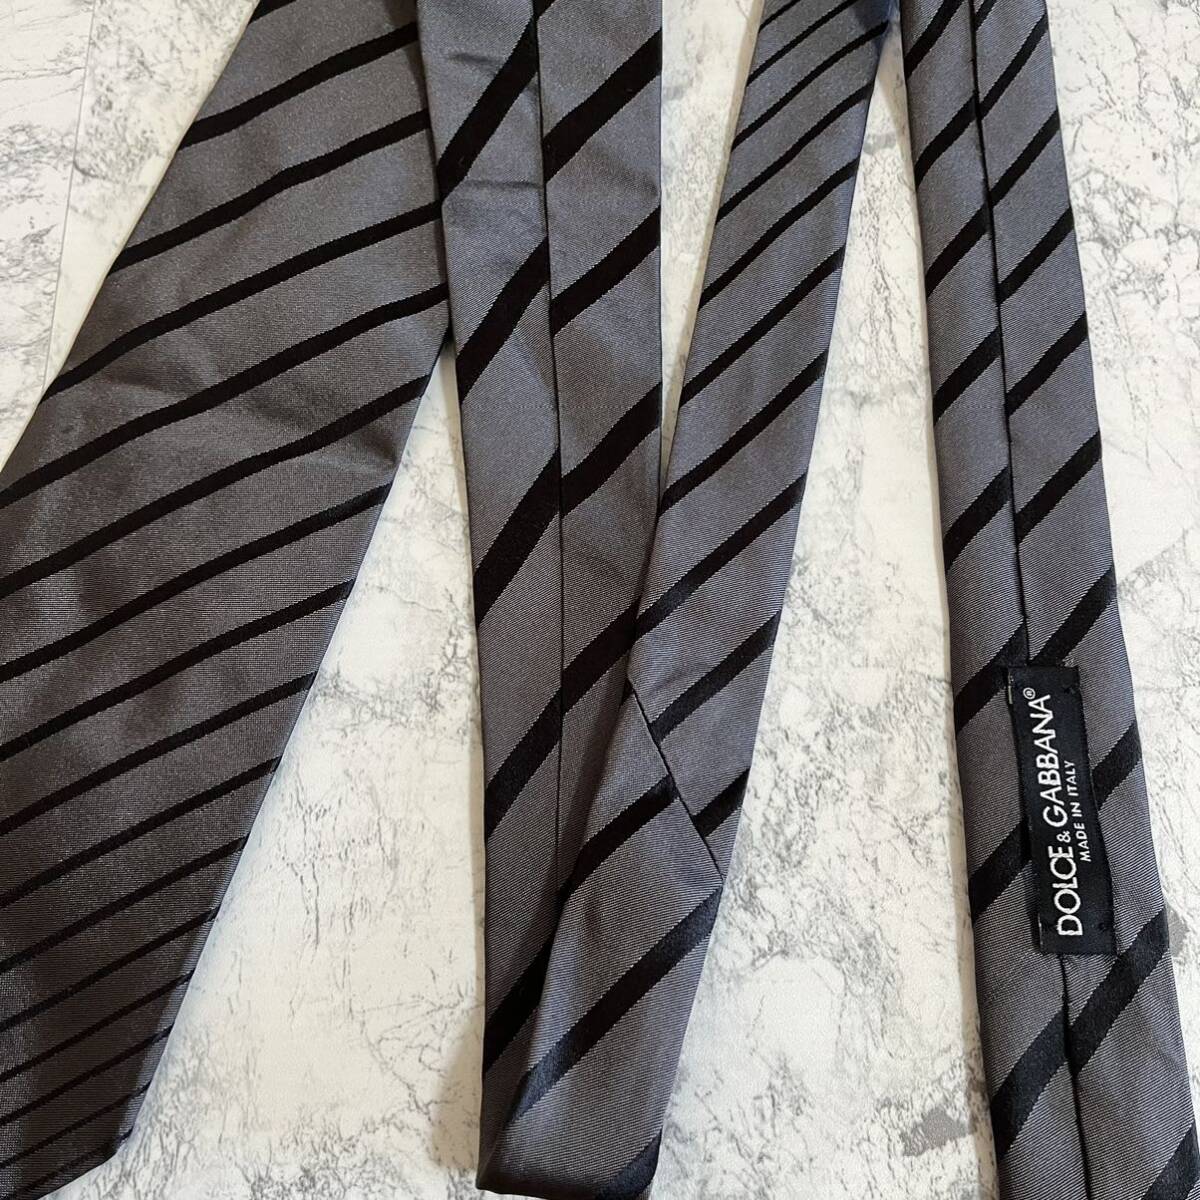 1 jpy beautiful goods Dolce & Gabbana DOLCE&GABBANA same day shipping brand necktie business suit silk silk high brand stripe pattern gray 